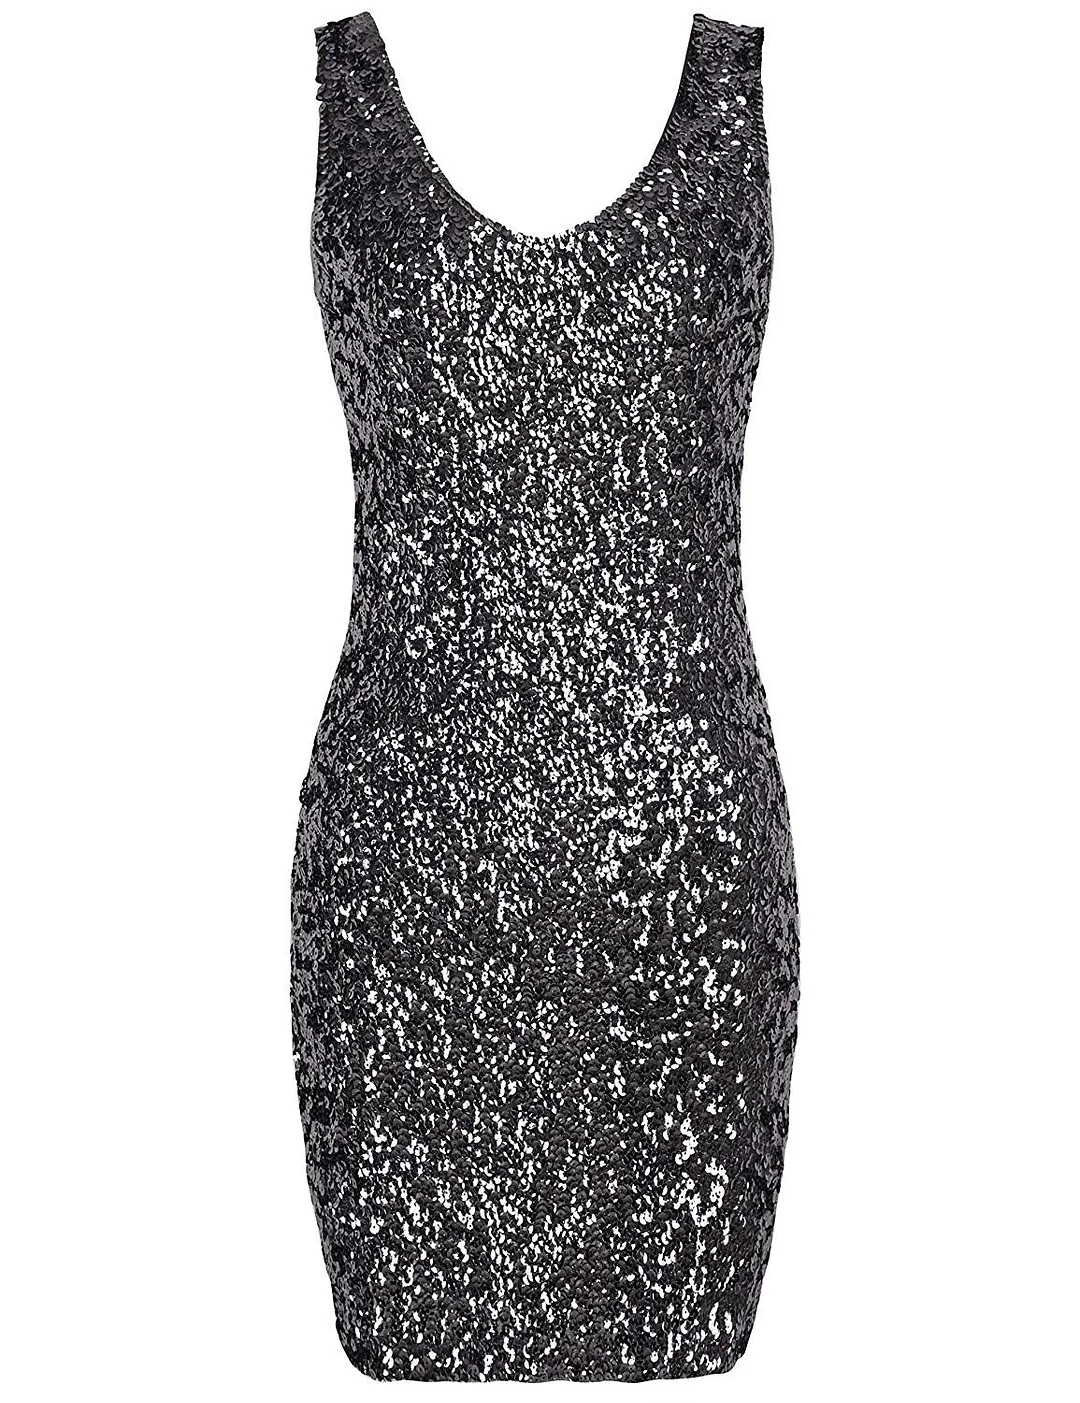 Women's Sparkly nightout dress Sexy Deep V Neck Sequin Glitter Bodycon Stretchy Mini Party Dress